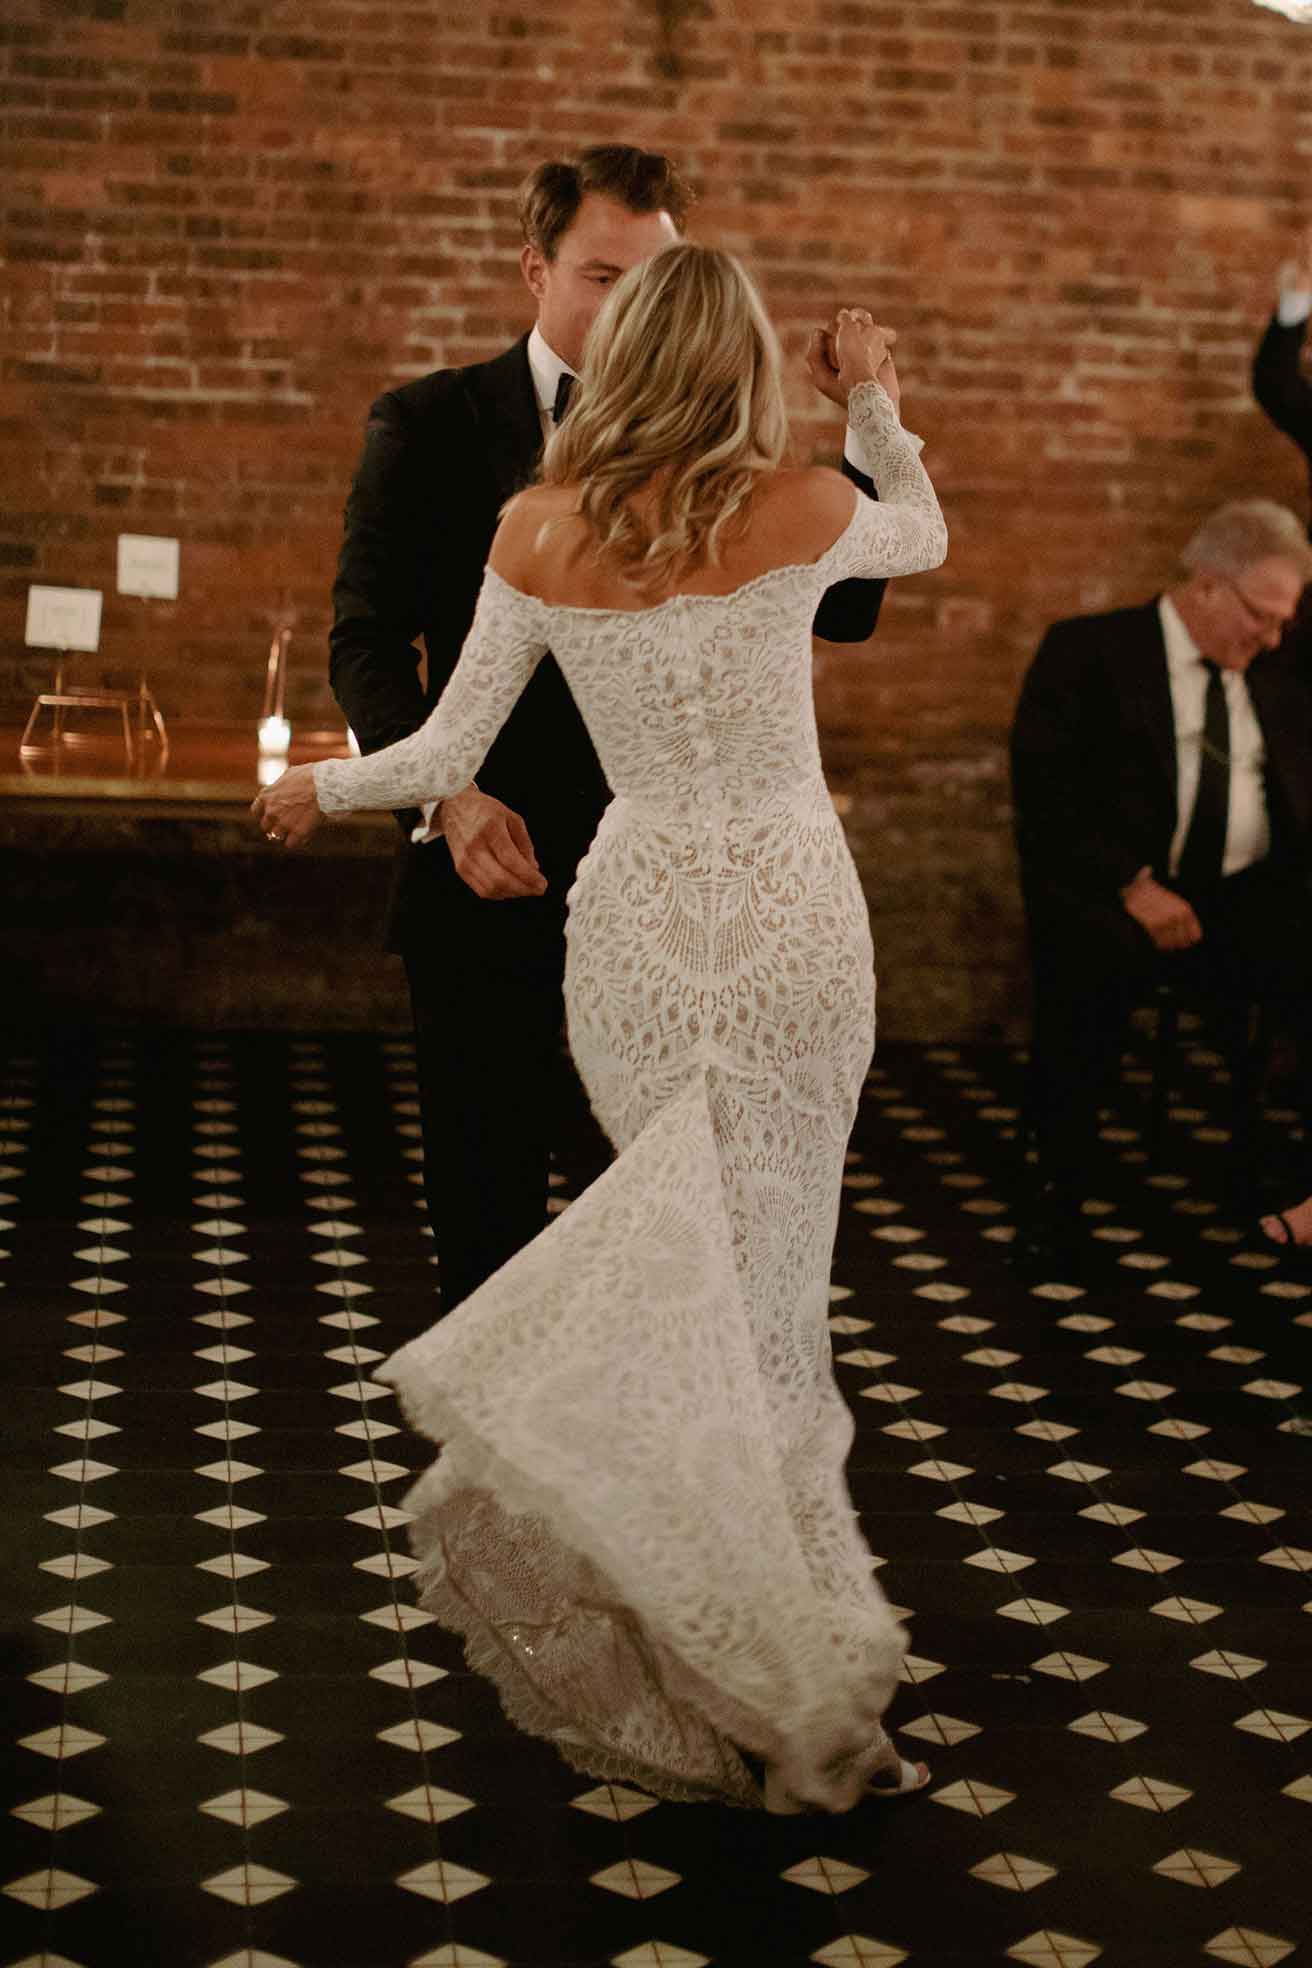 Bride and Groom dancing